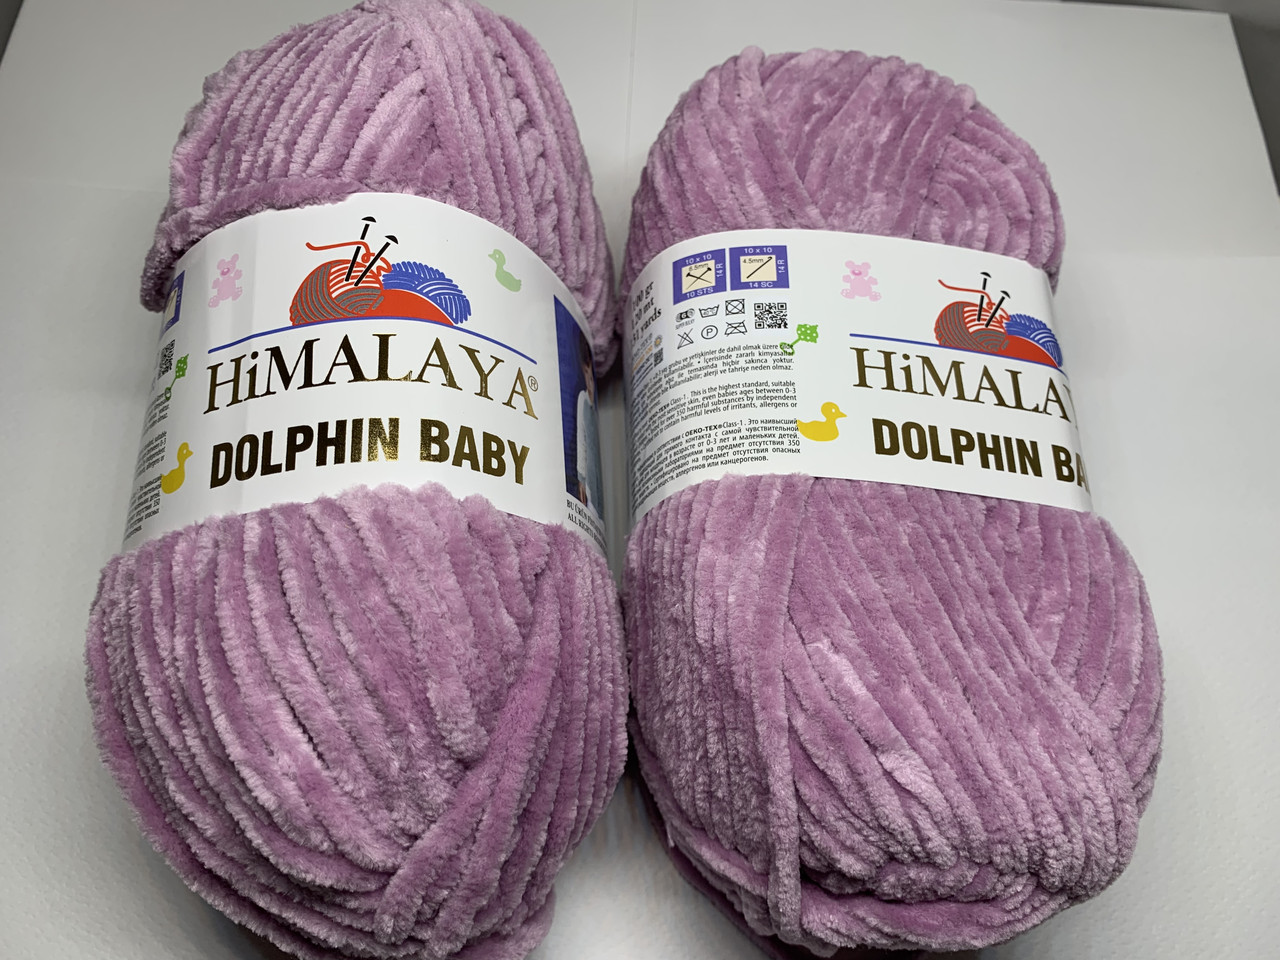 Himalaya Dolphin Baby Chenille Yarn, Lilac - 80356